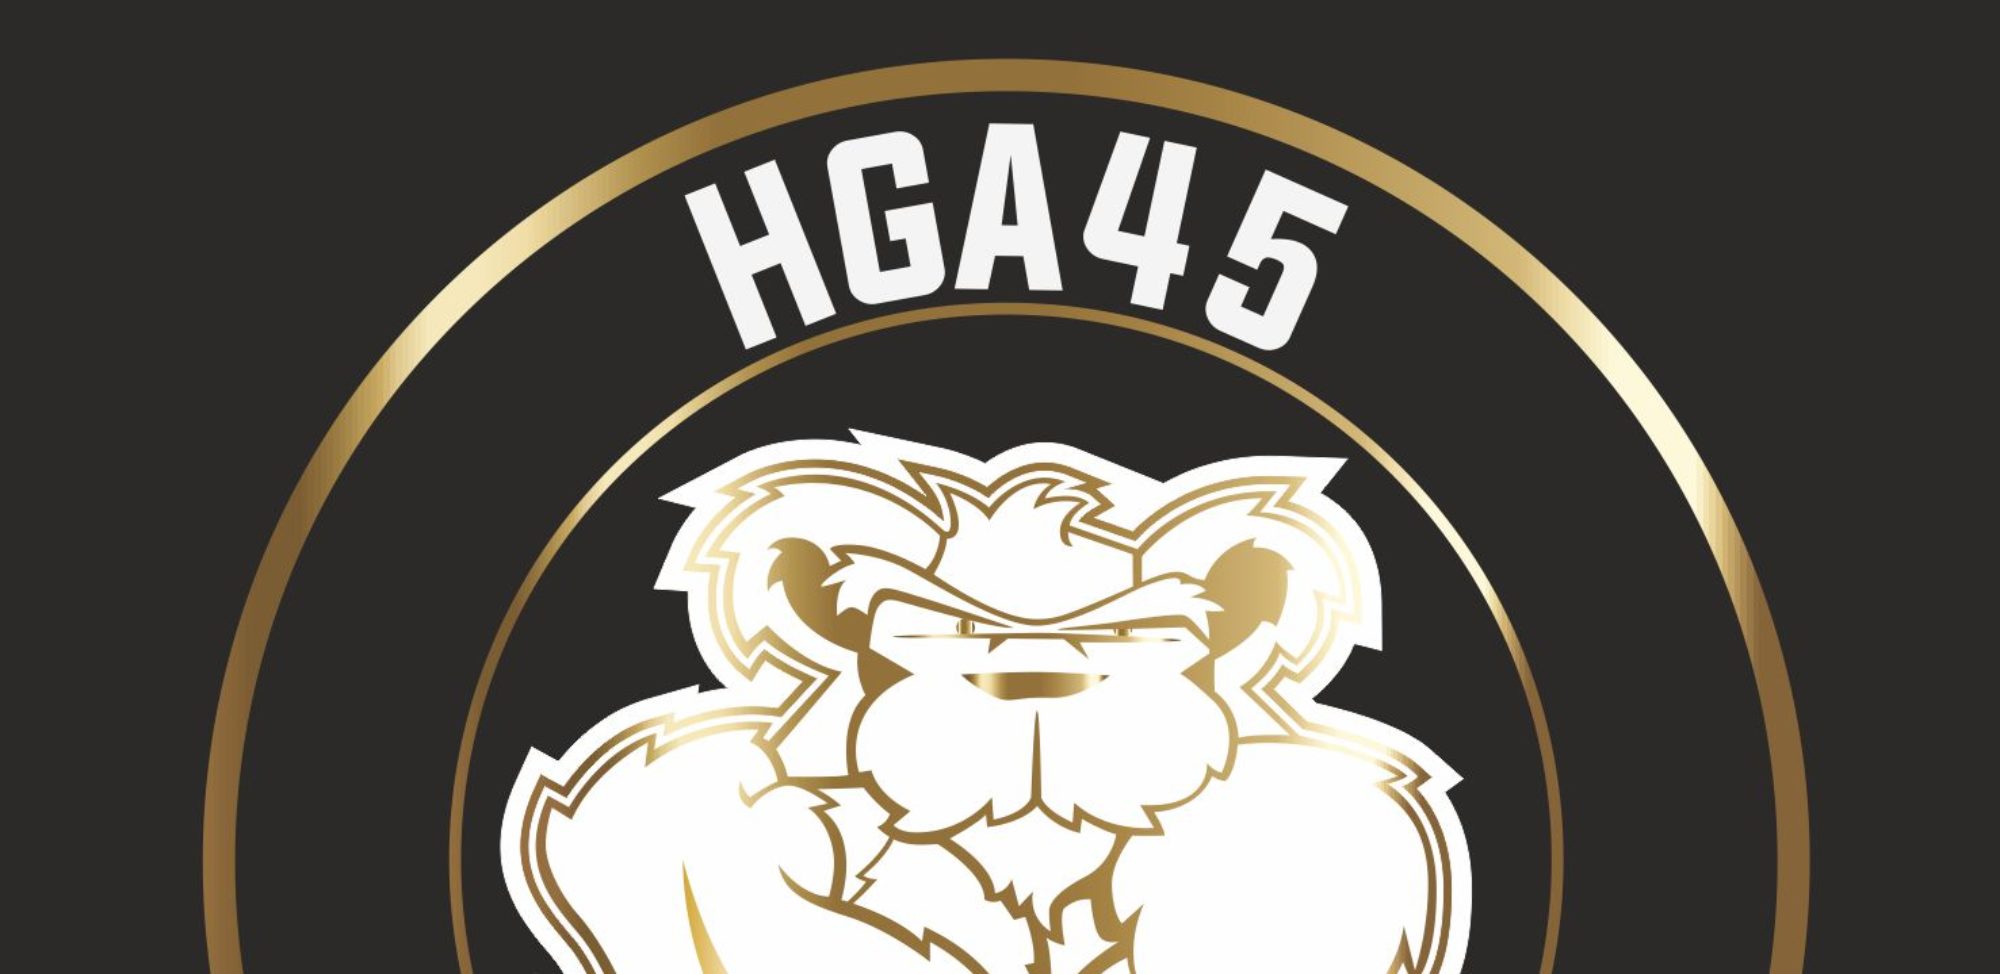 HGA 45